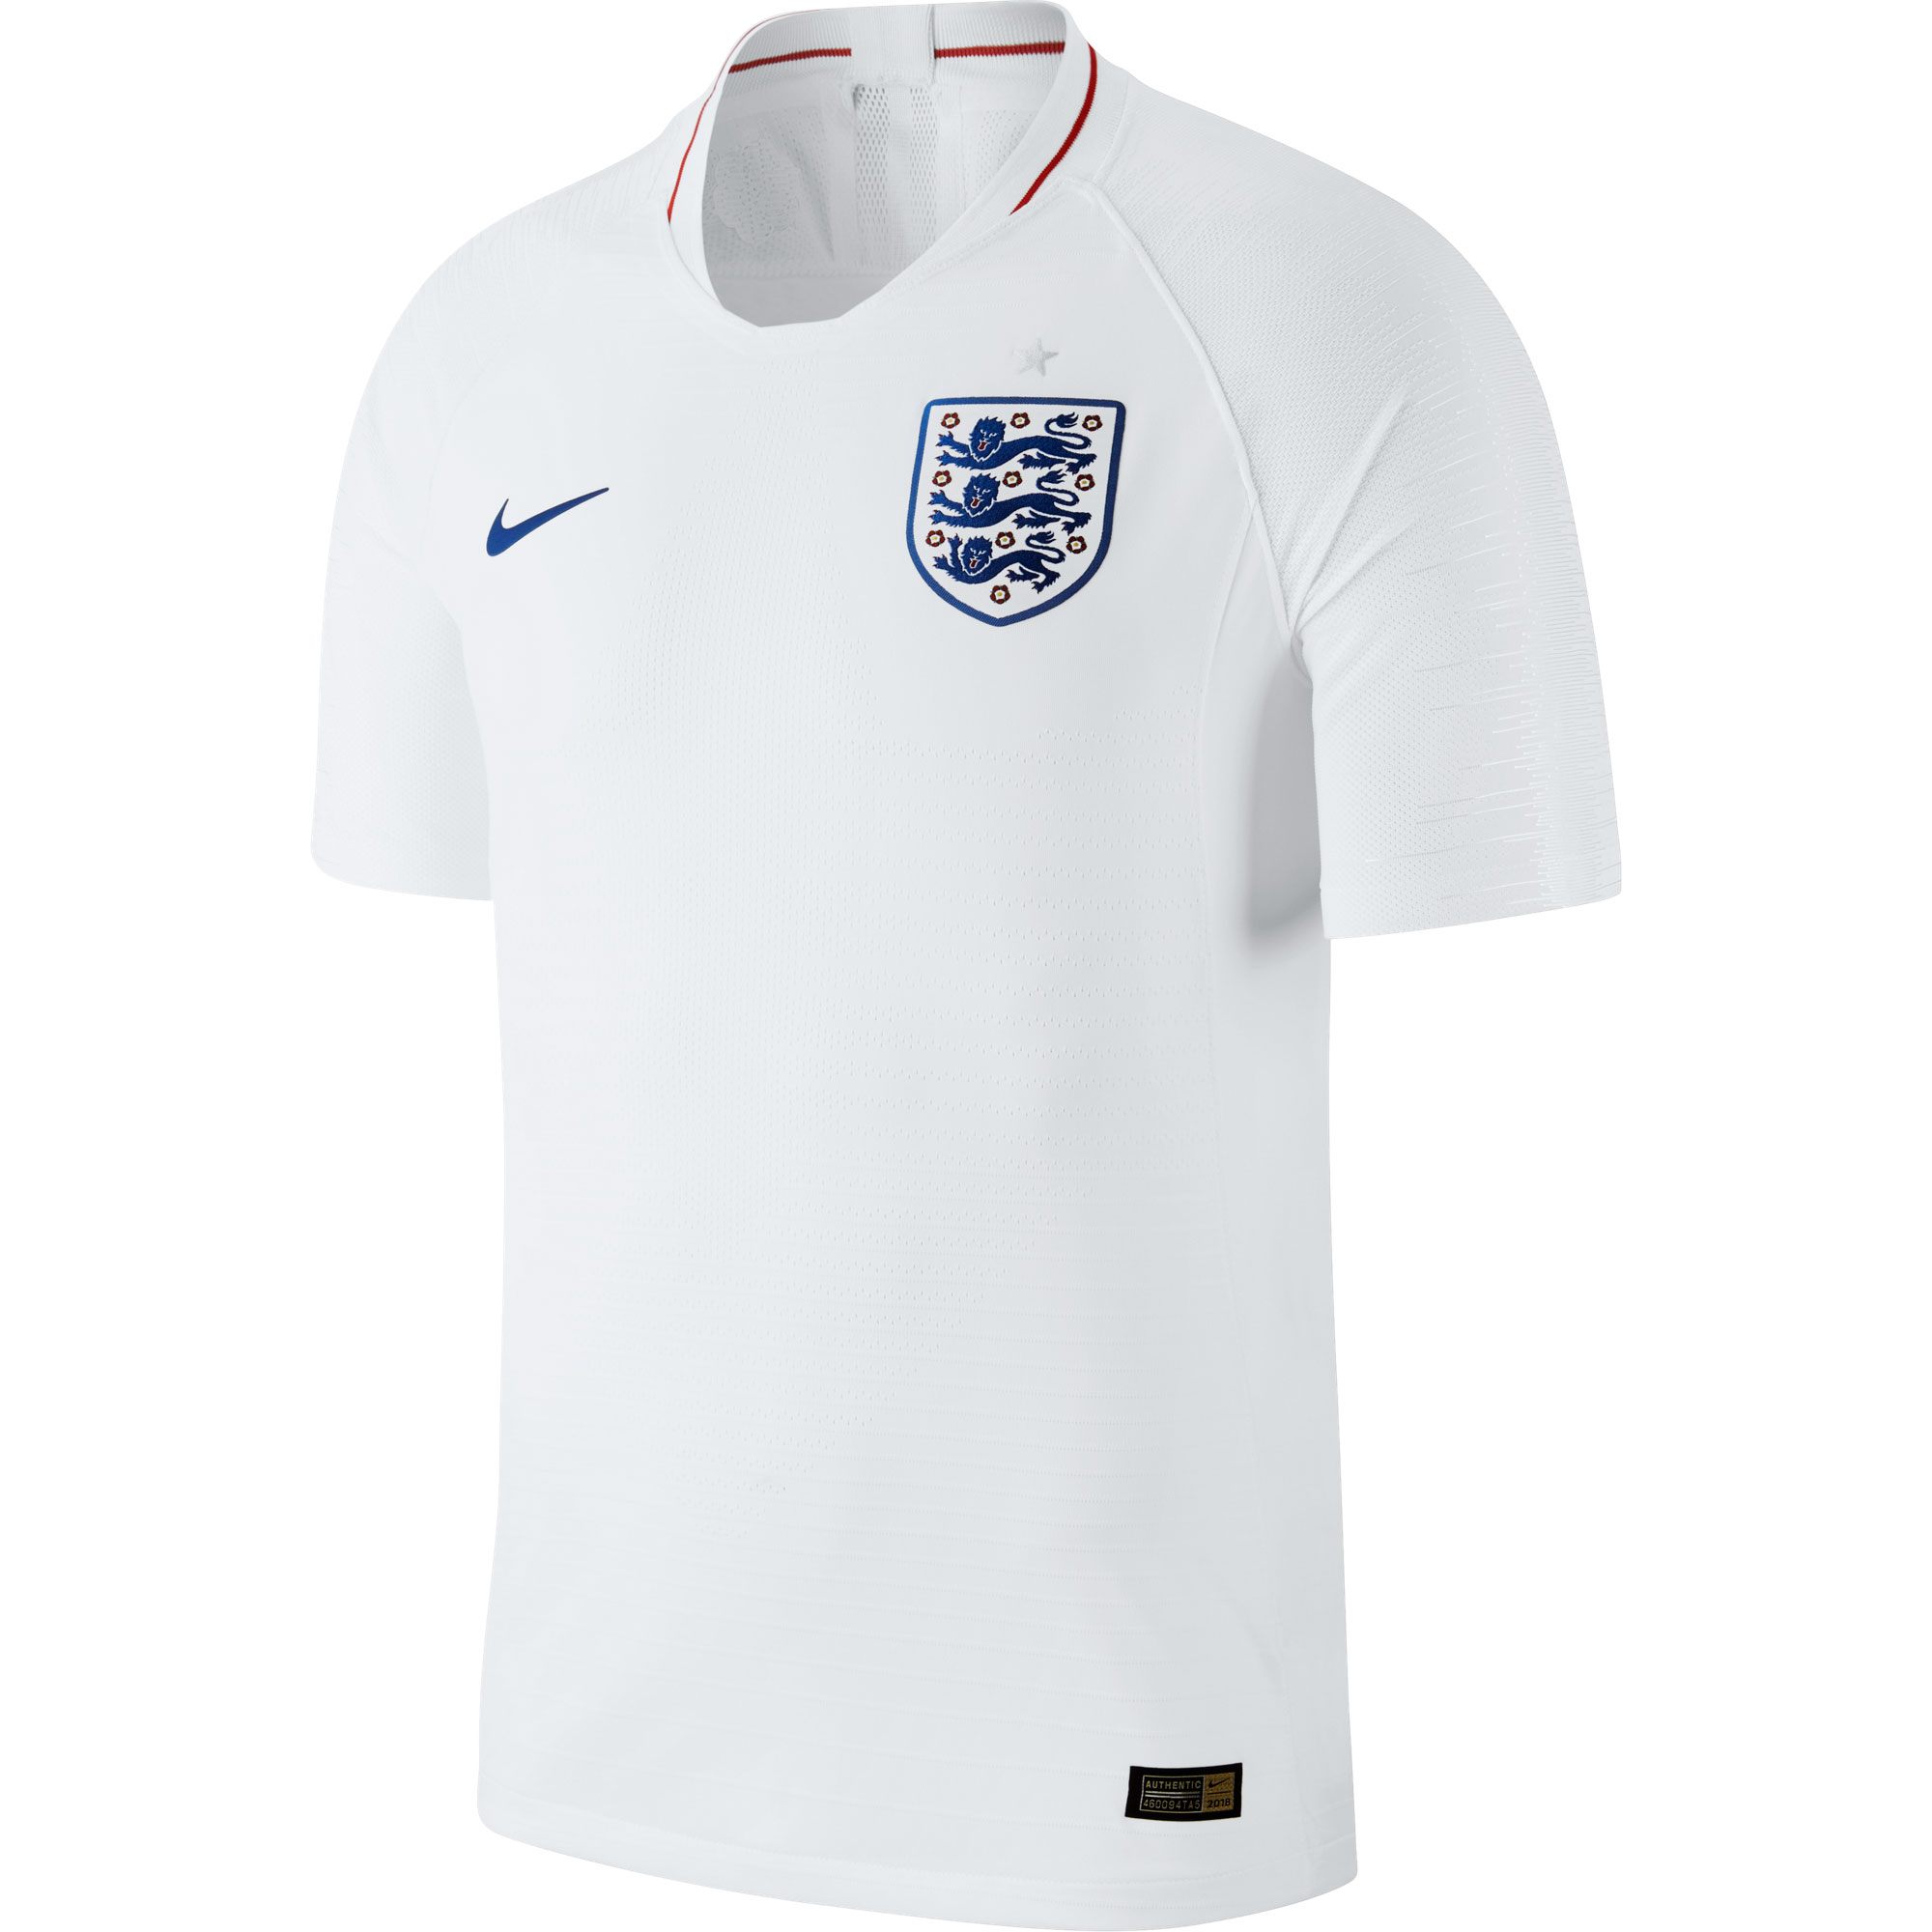 New Season England Home football shirt 2018 - 2020.